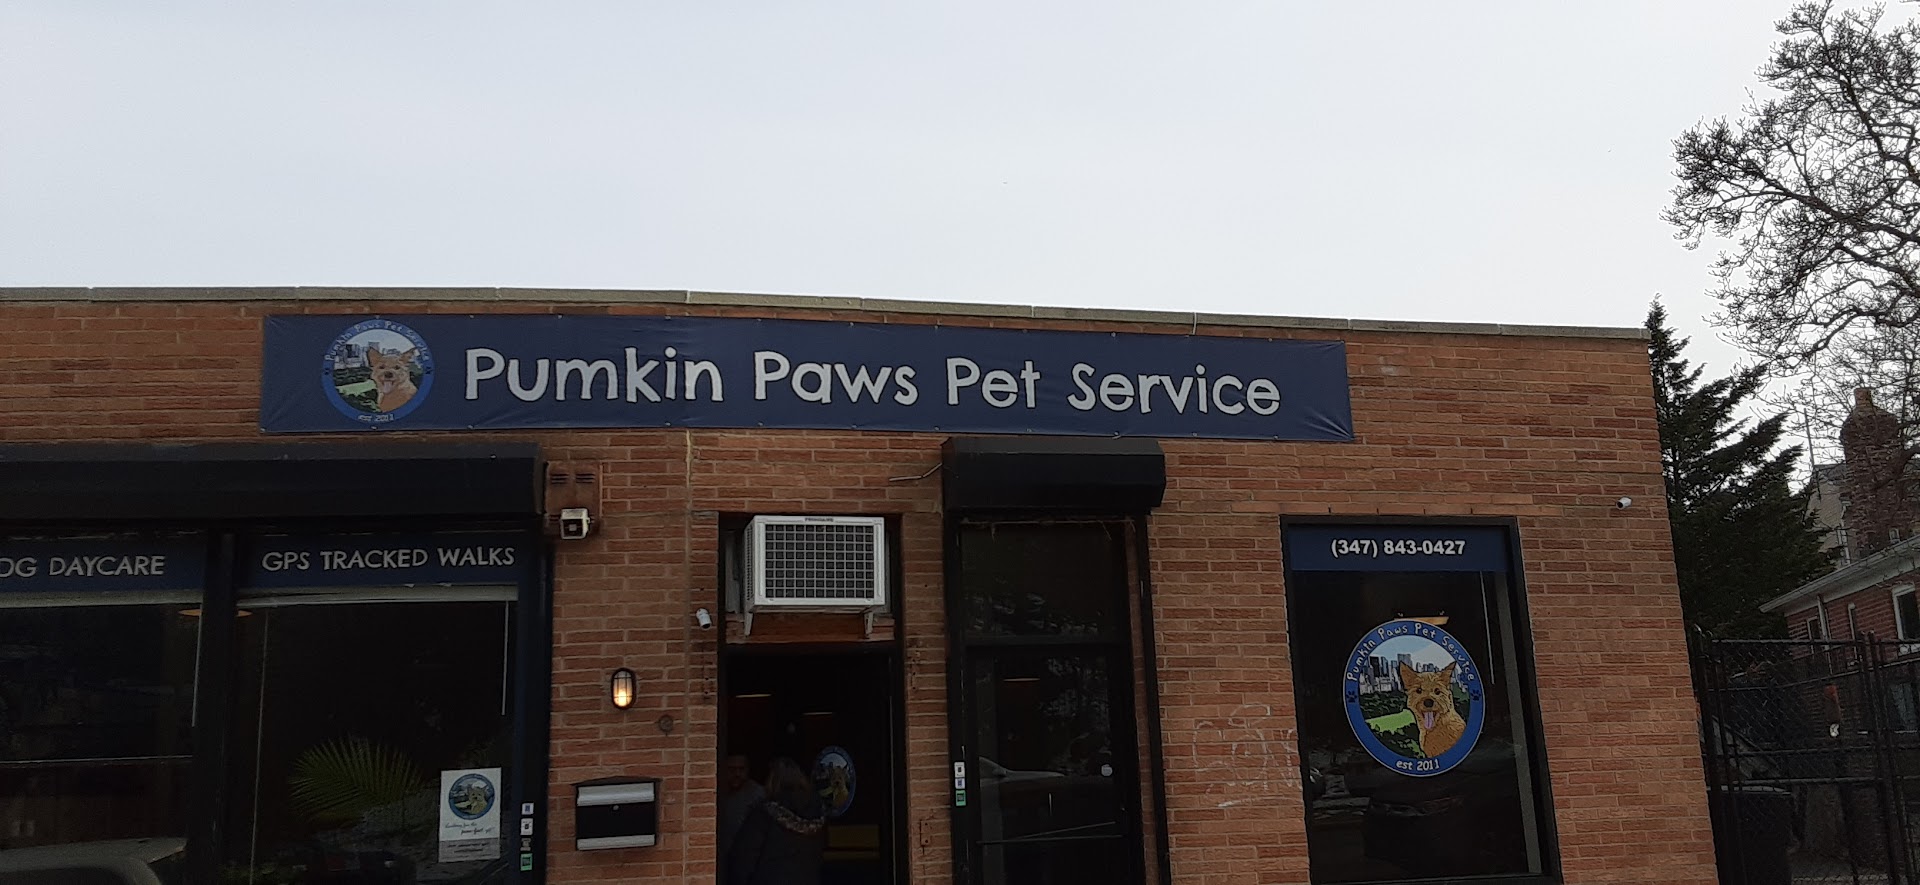 Pumkin Paws Pet Service